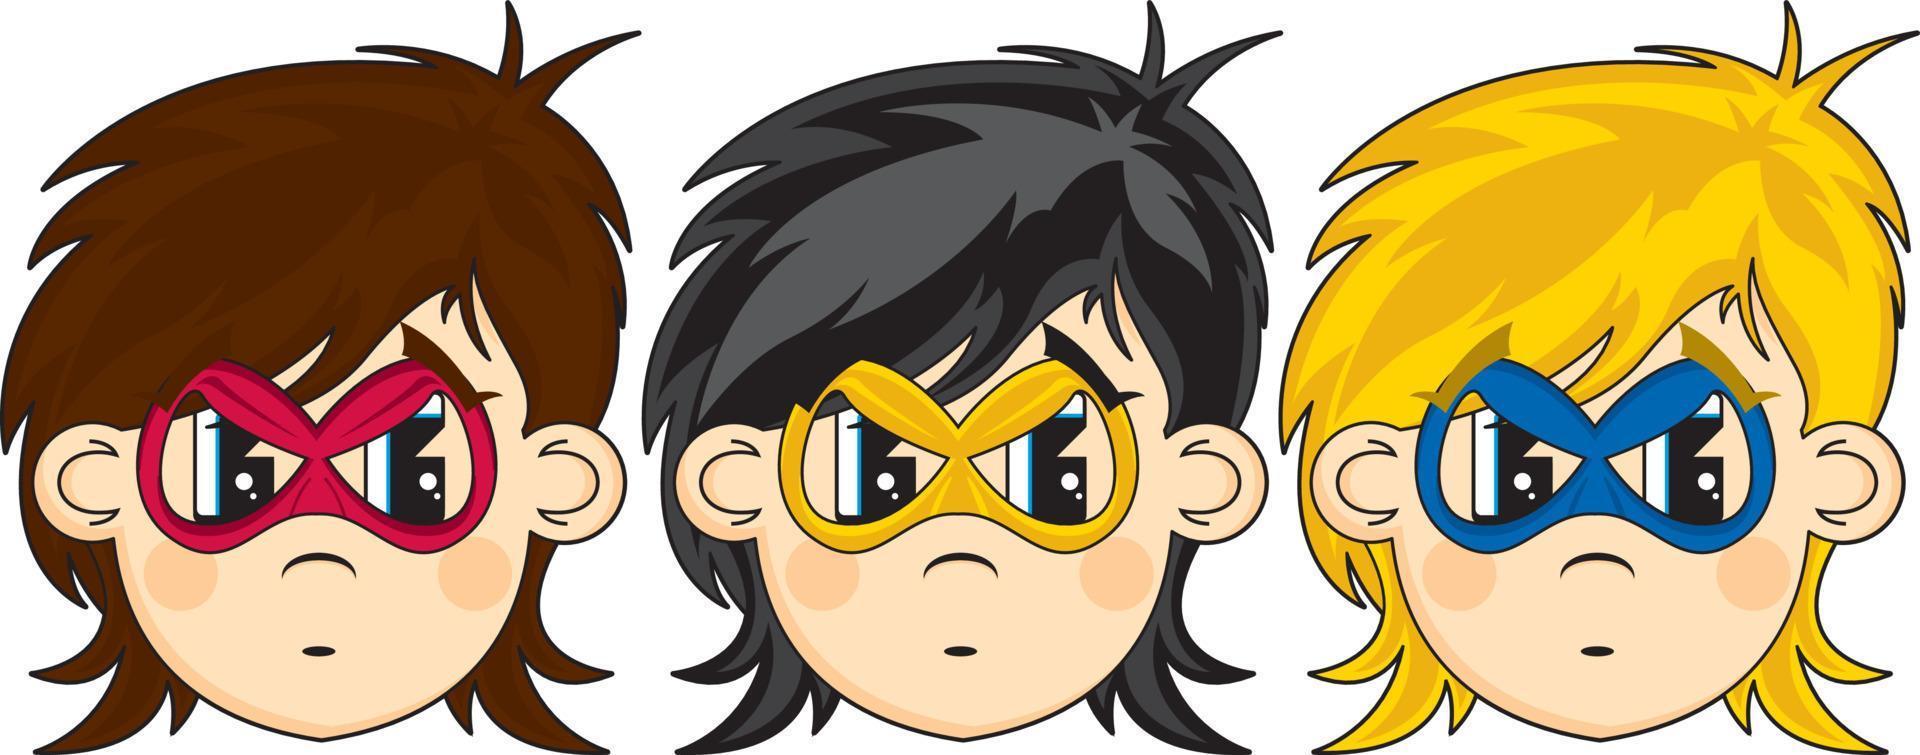 Cartoon Heroic Superhero Heads vector